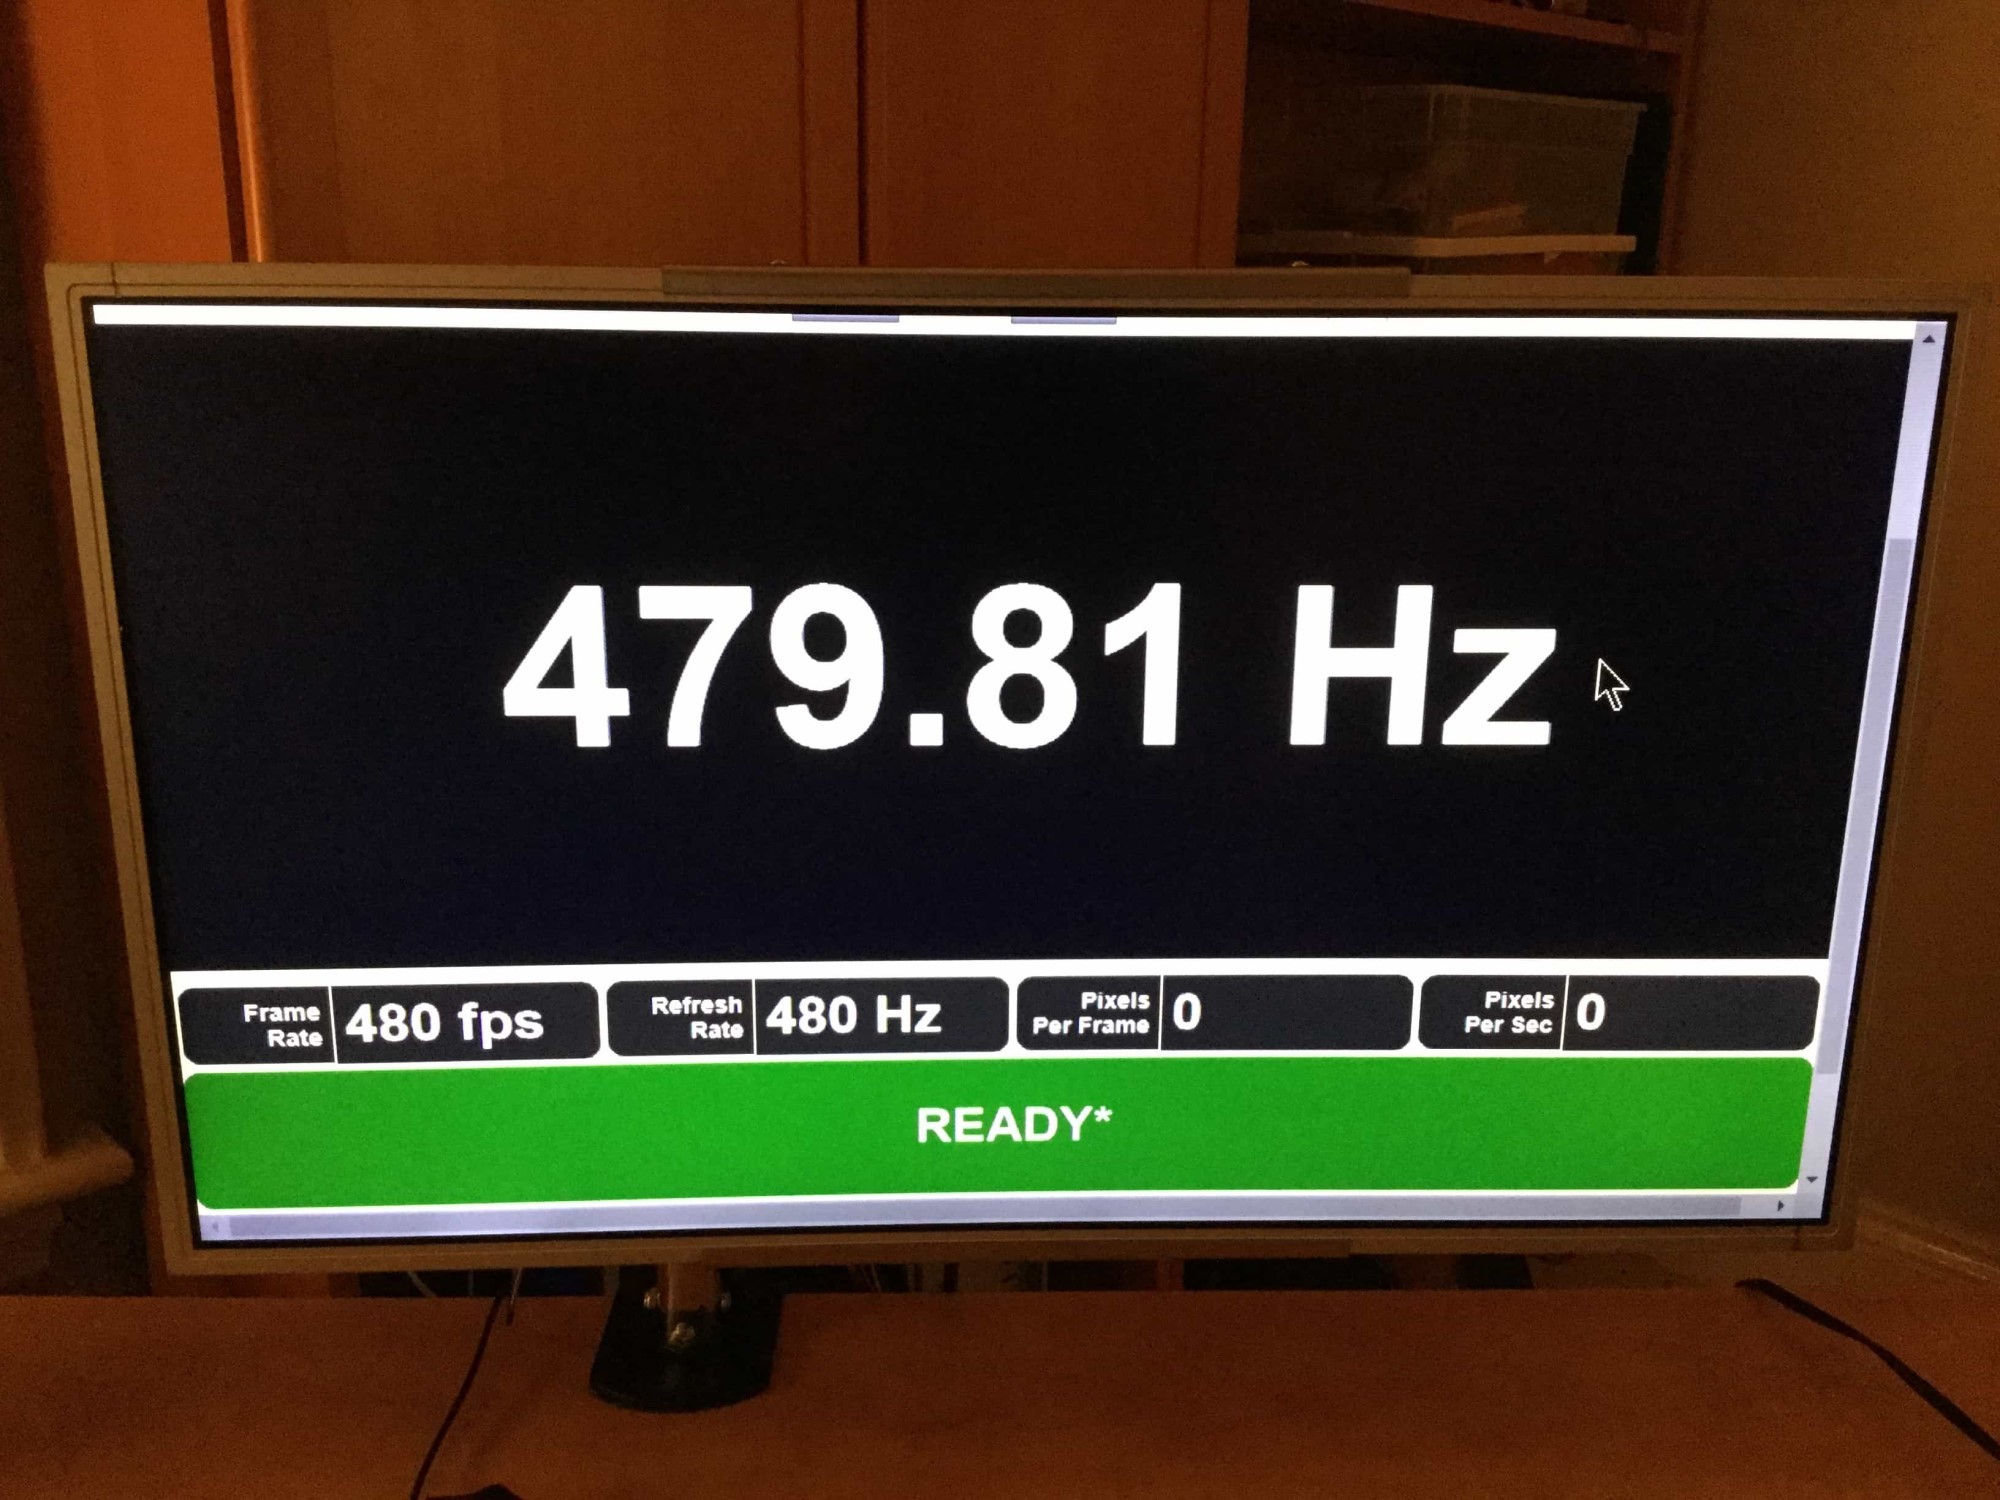 LG Display Framerate 480 Hz